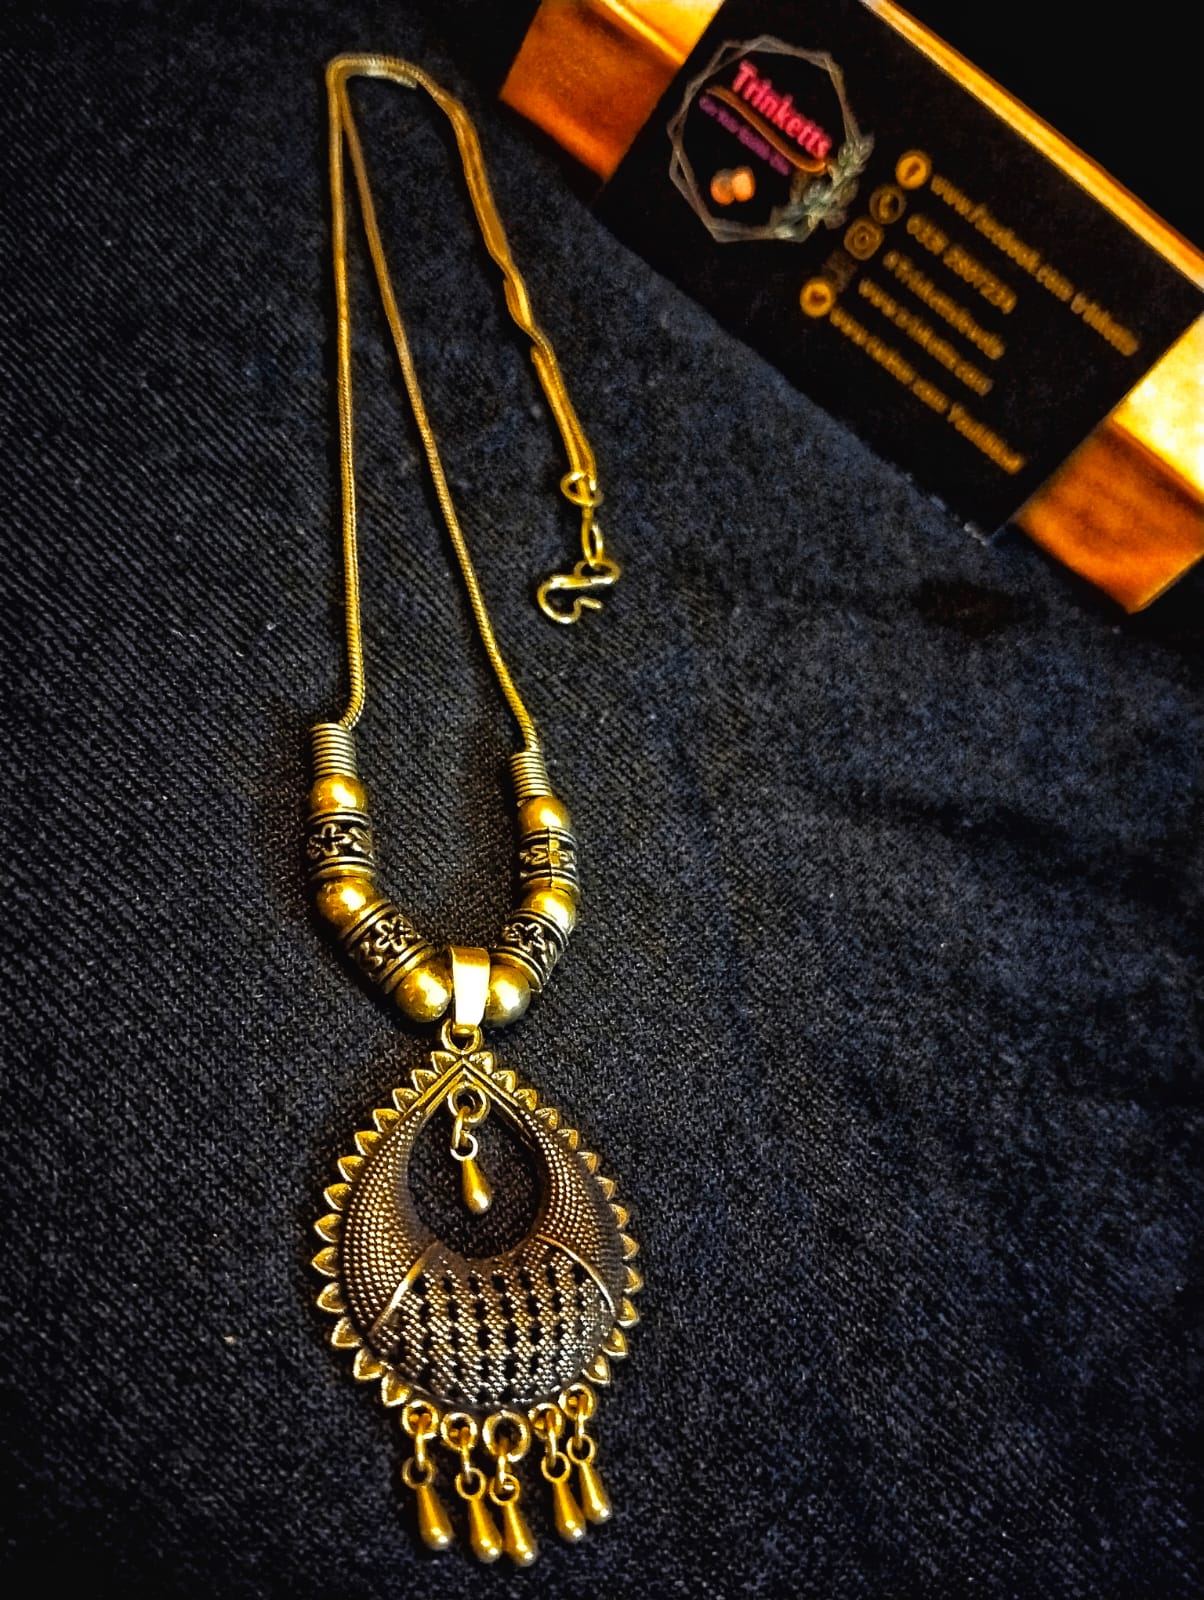 Oxidized Golden Chandelier Pendant Necklace on Display - Trinketts Jewelry